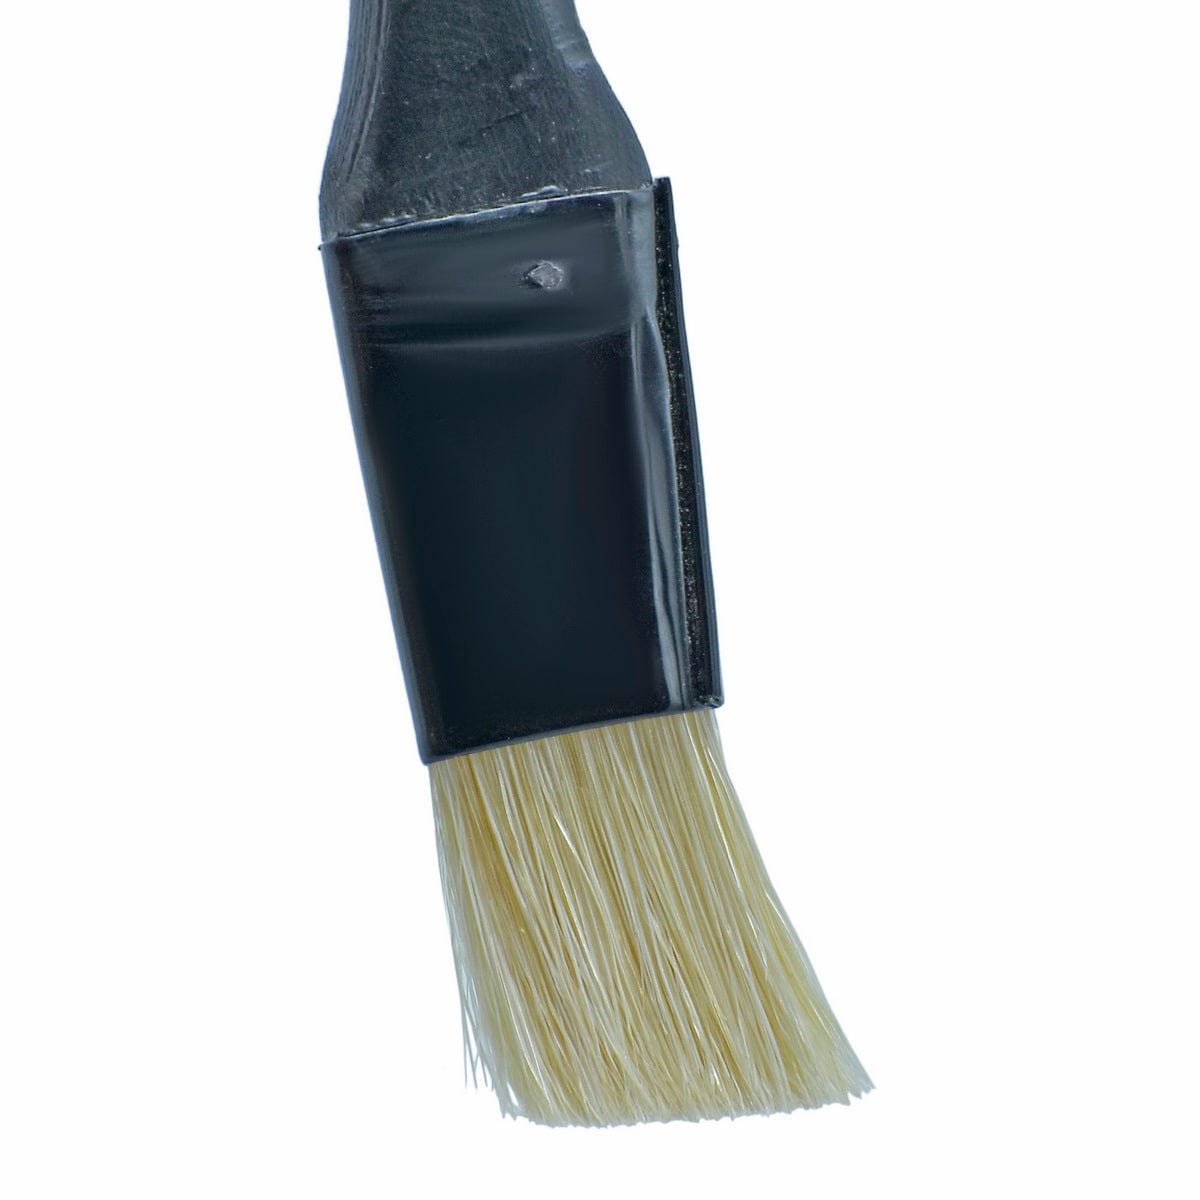 jags-mumbai Tools Jags Wash Brush Hog Bristle Black Handle 12MM - Fine Detailing Tool for Precision Cleaning